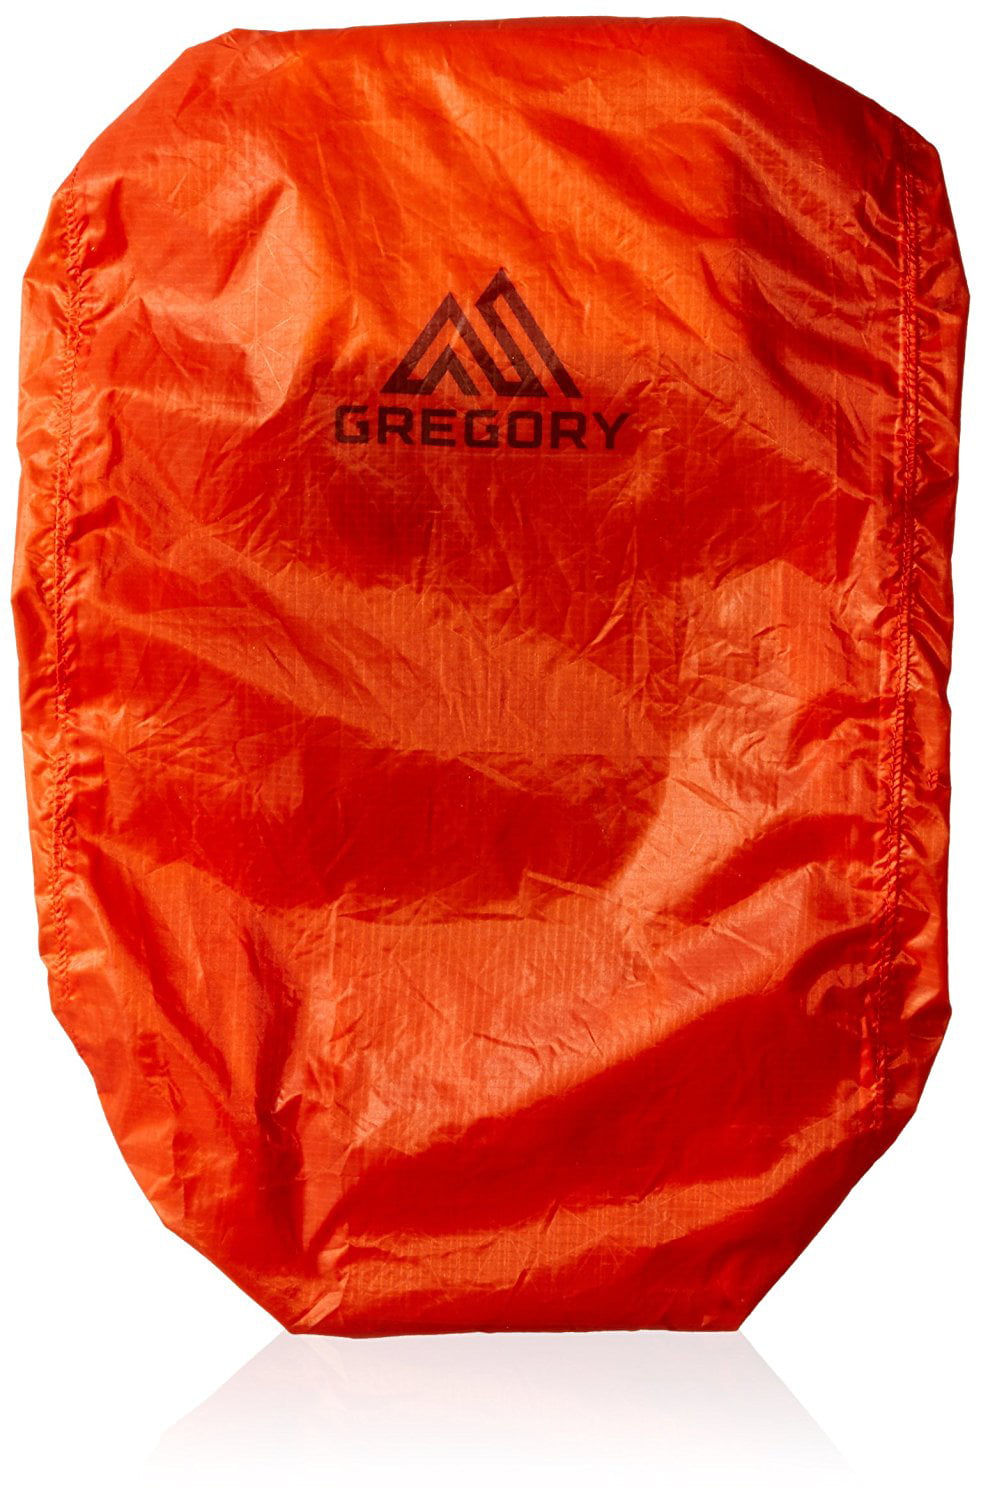 gregory lantern bag